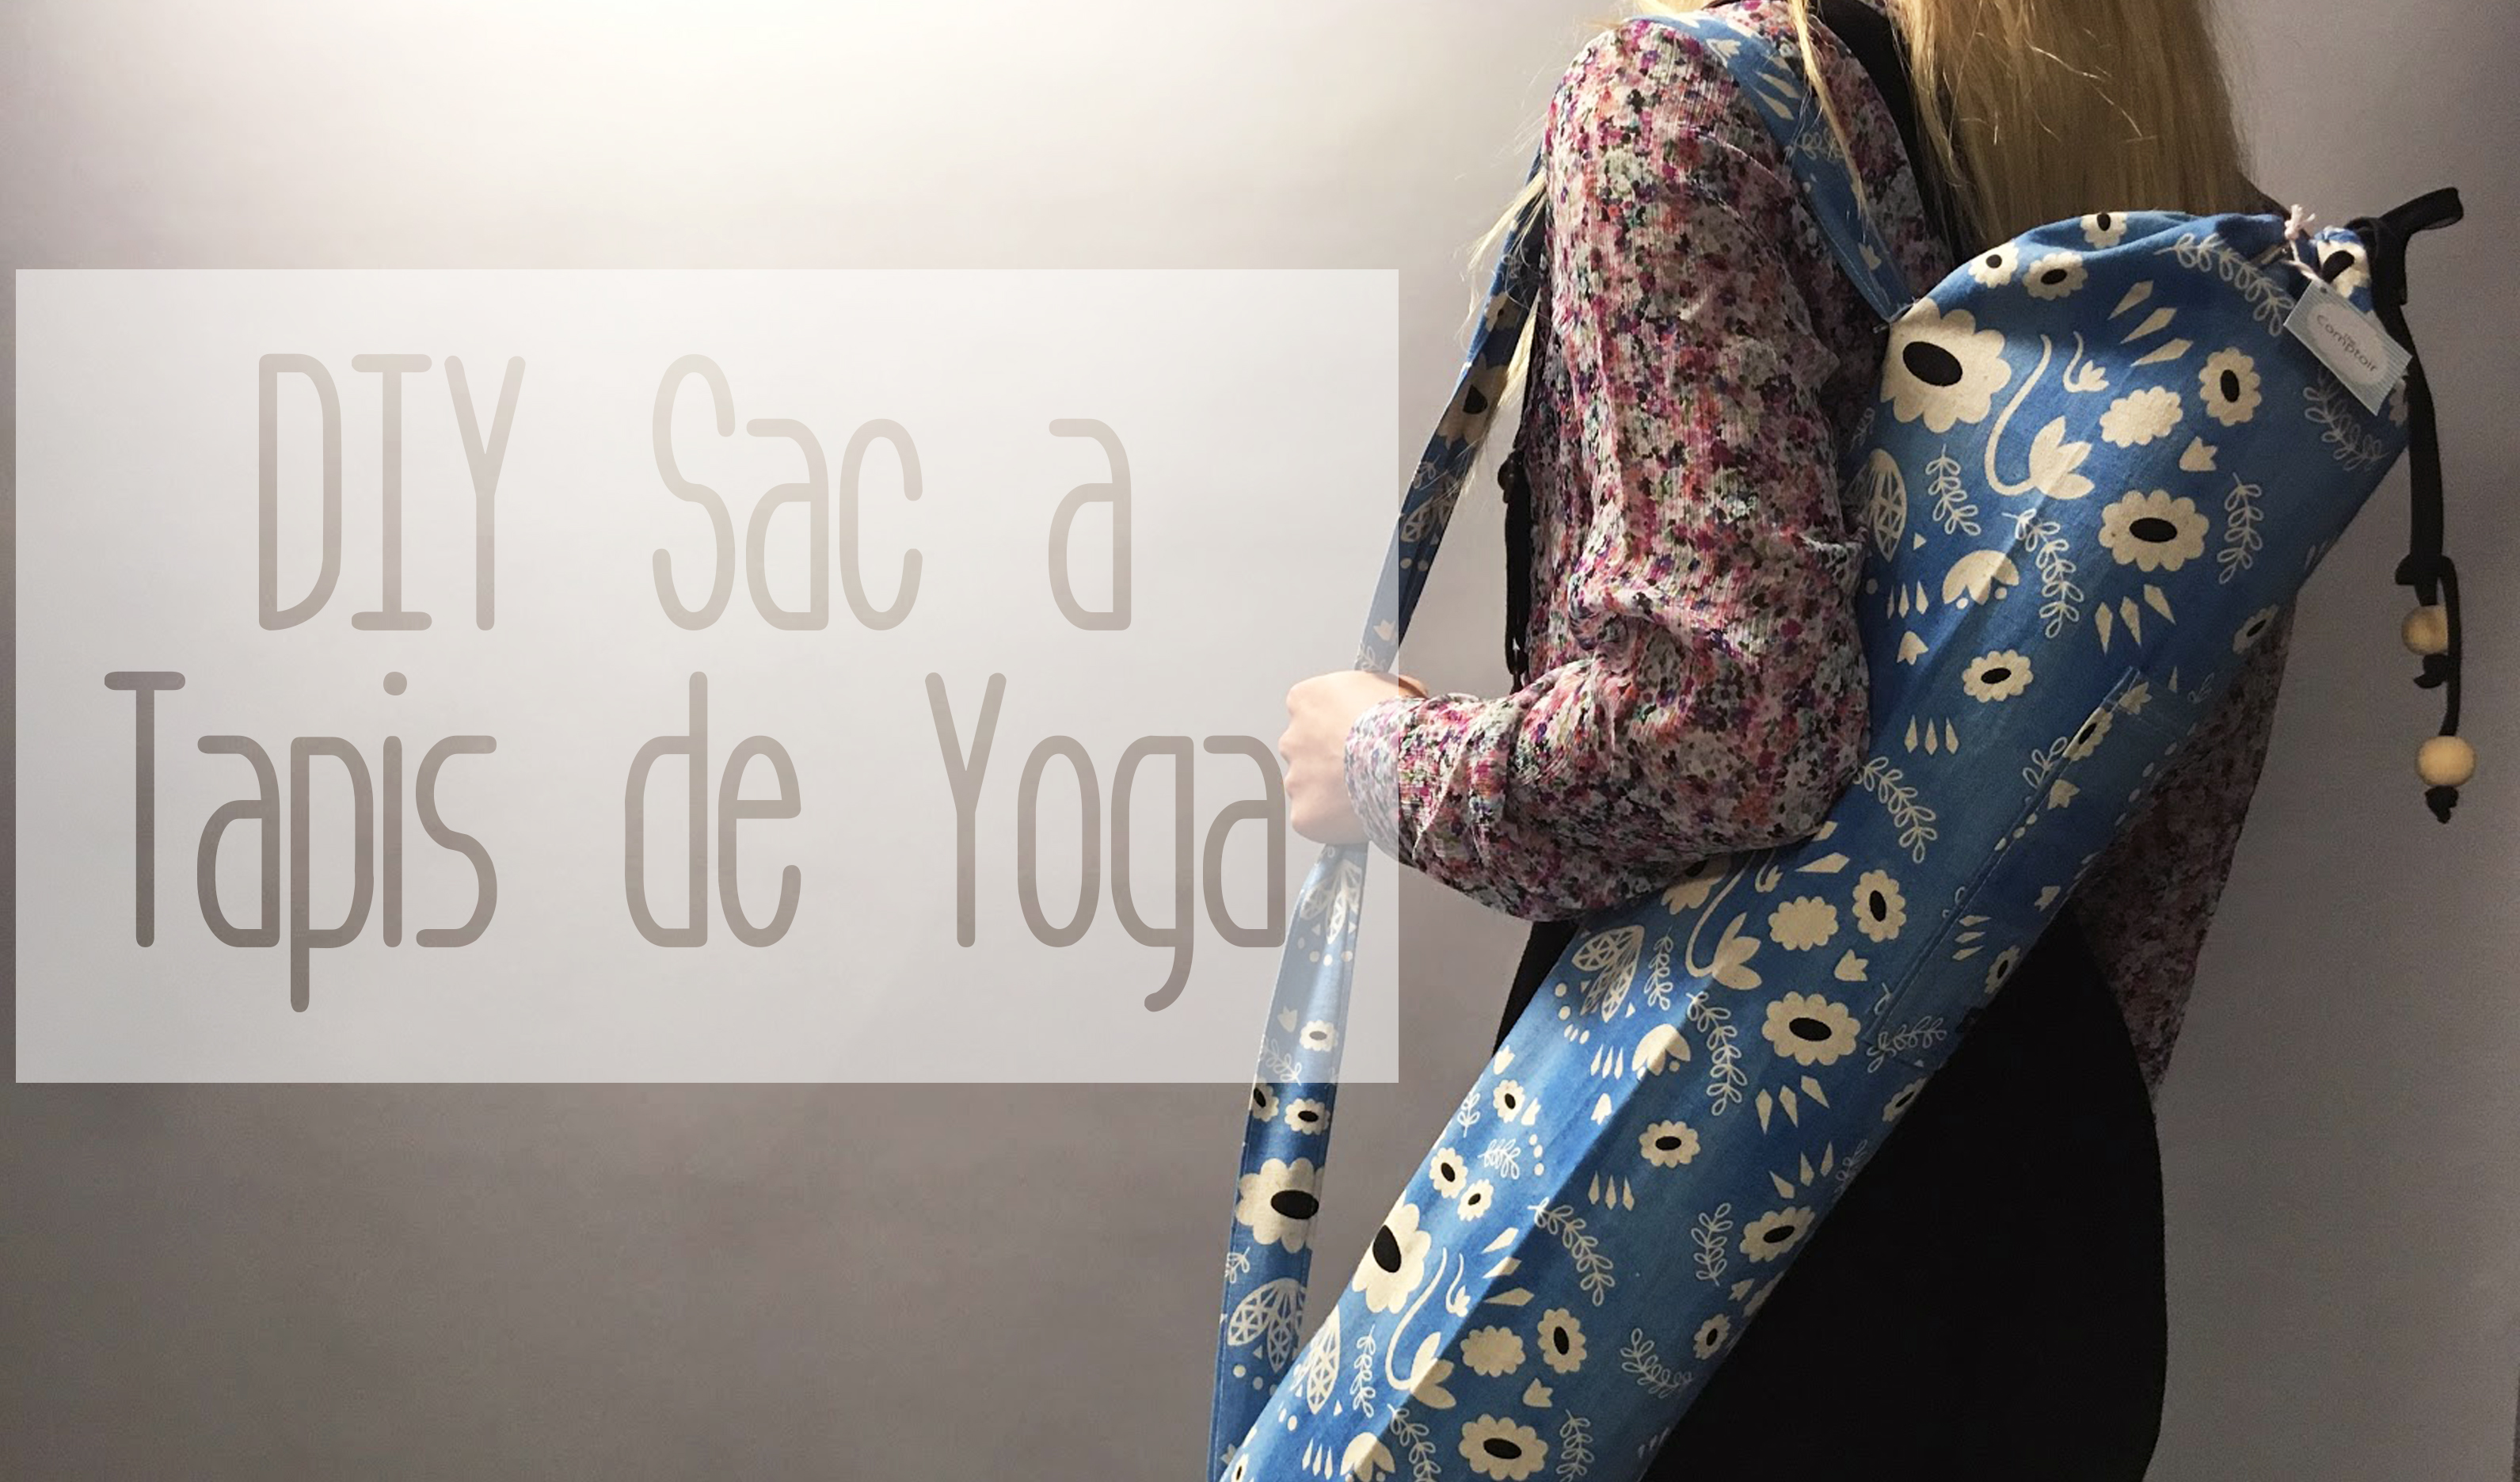 diy couture le sac a tapis de yoga